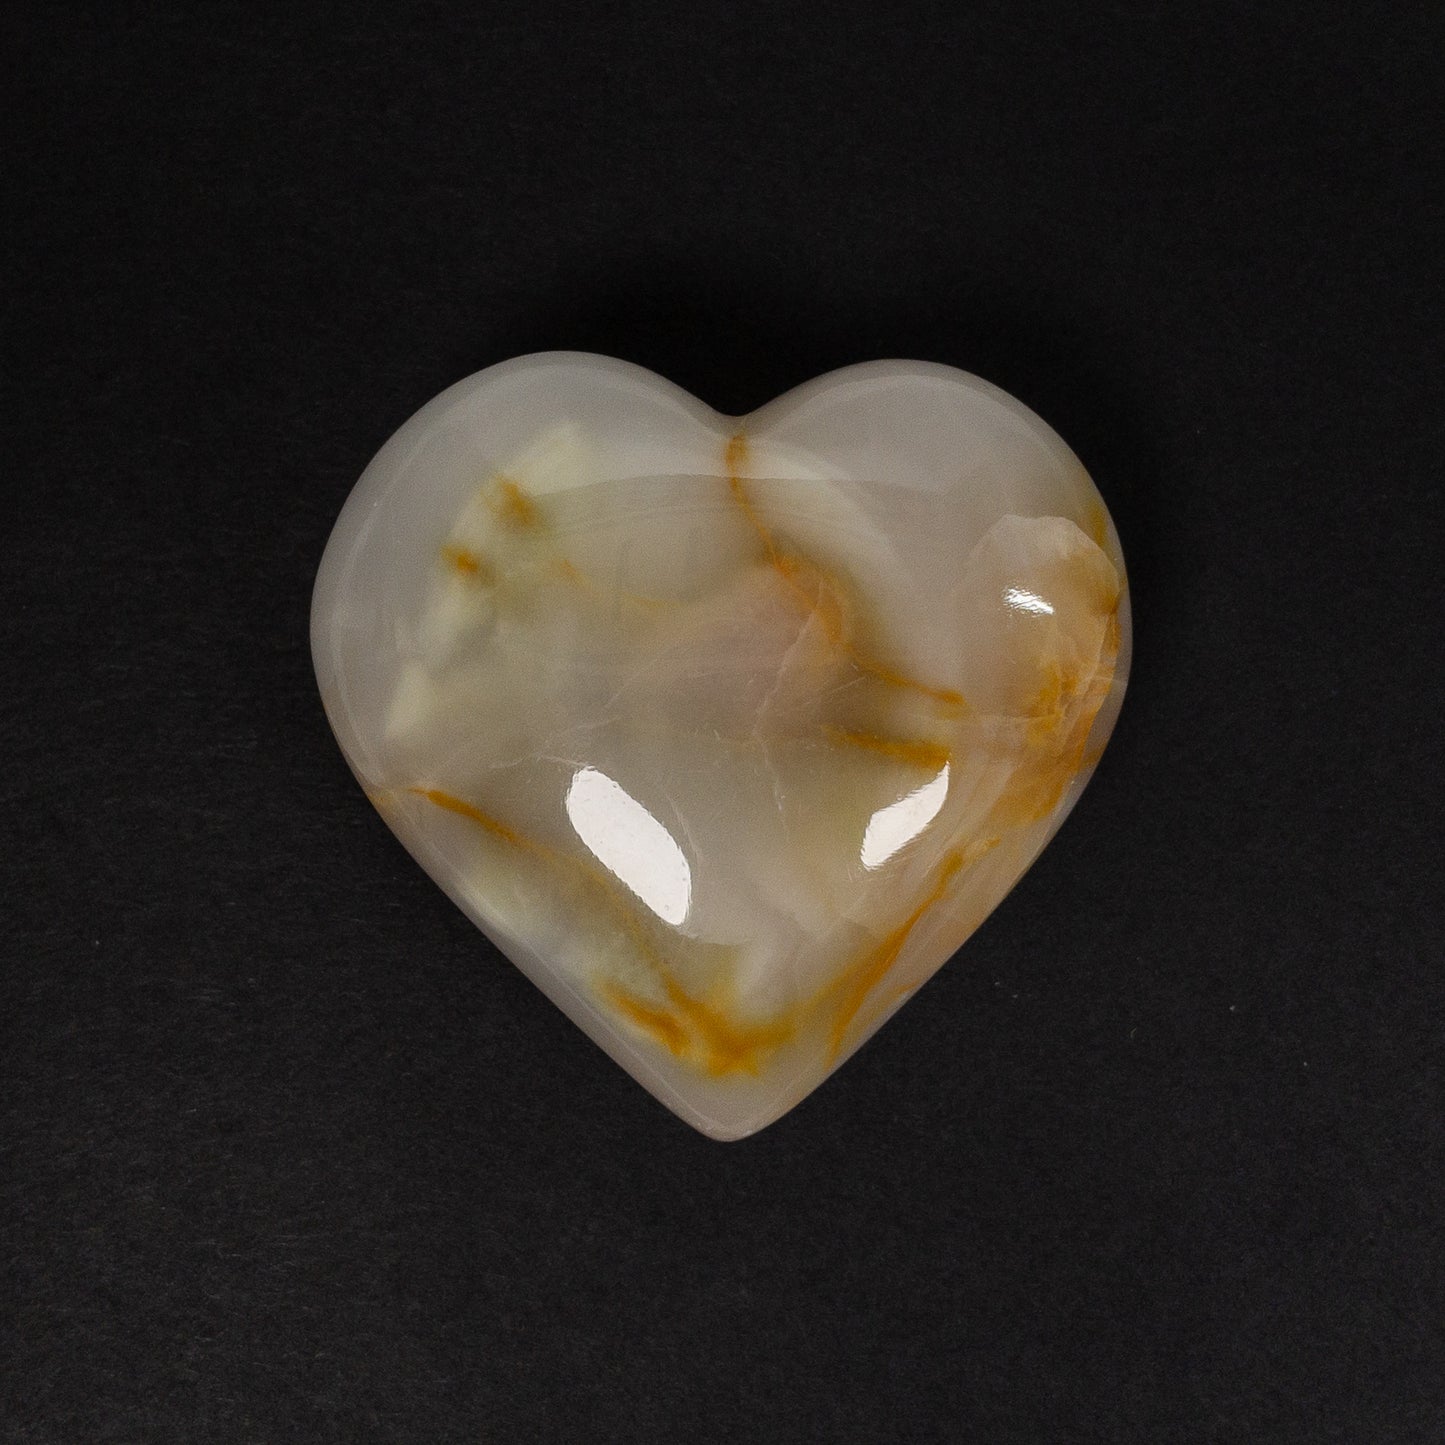 Calcite Large Smooth Heart Palm Stone Specimen - 1 pc.